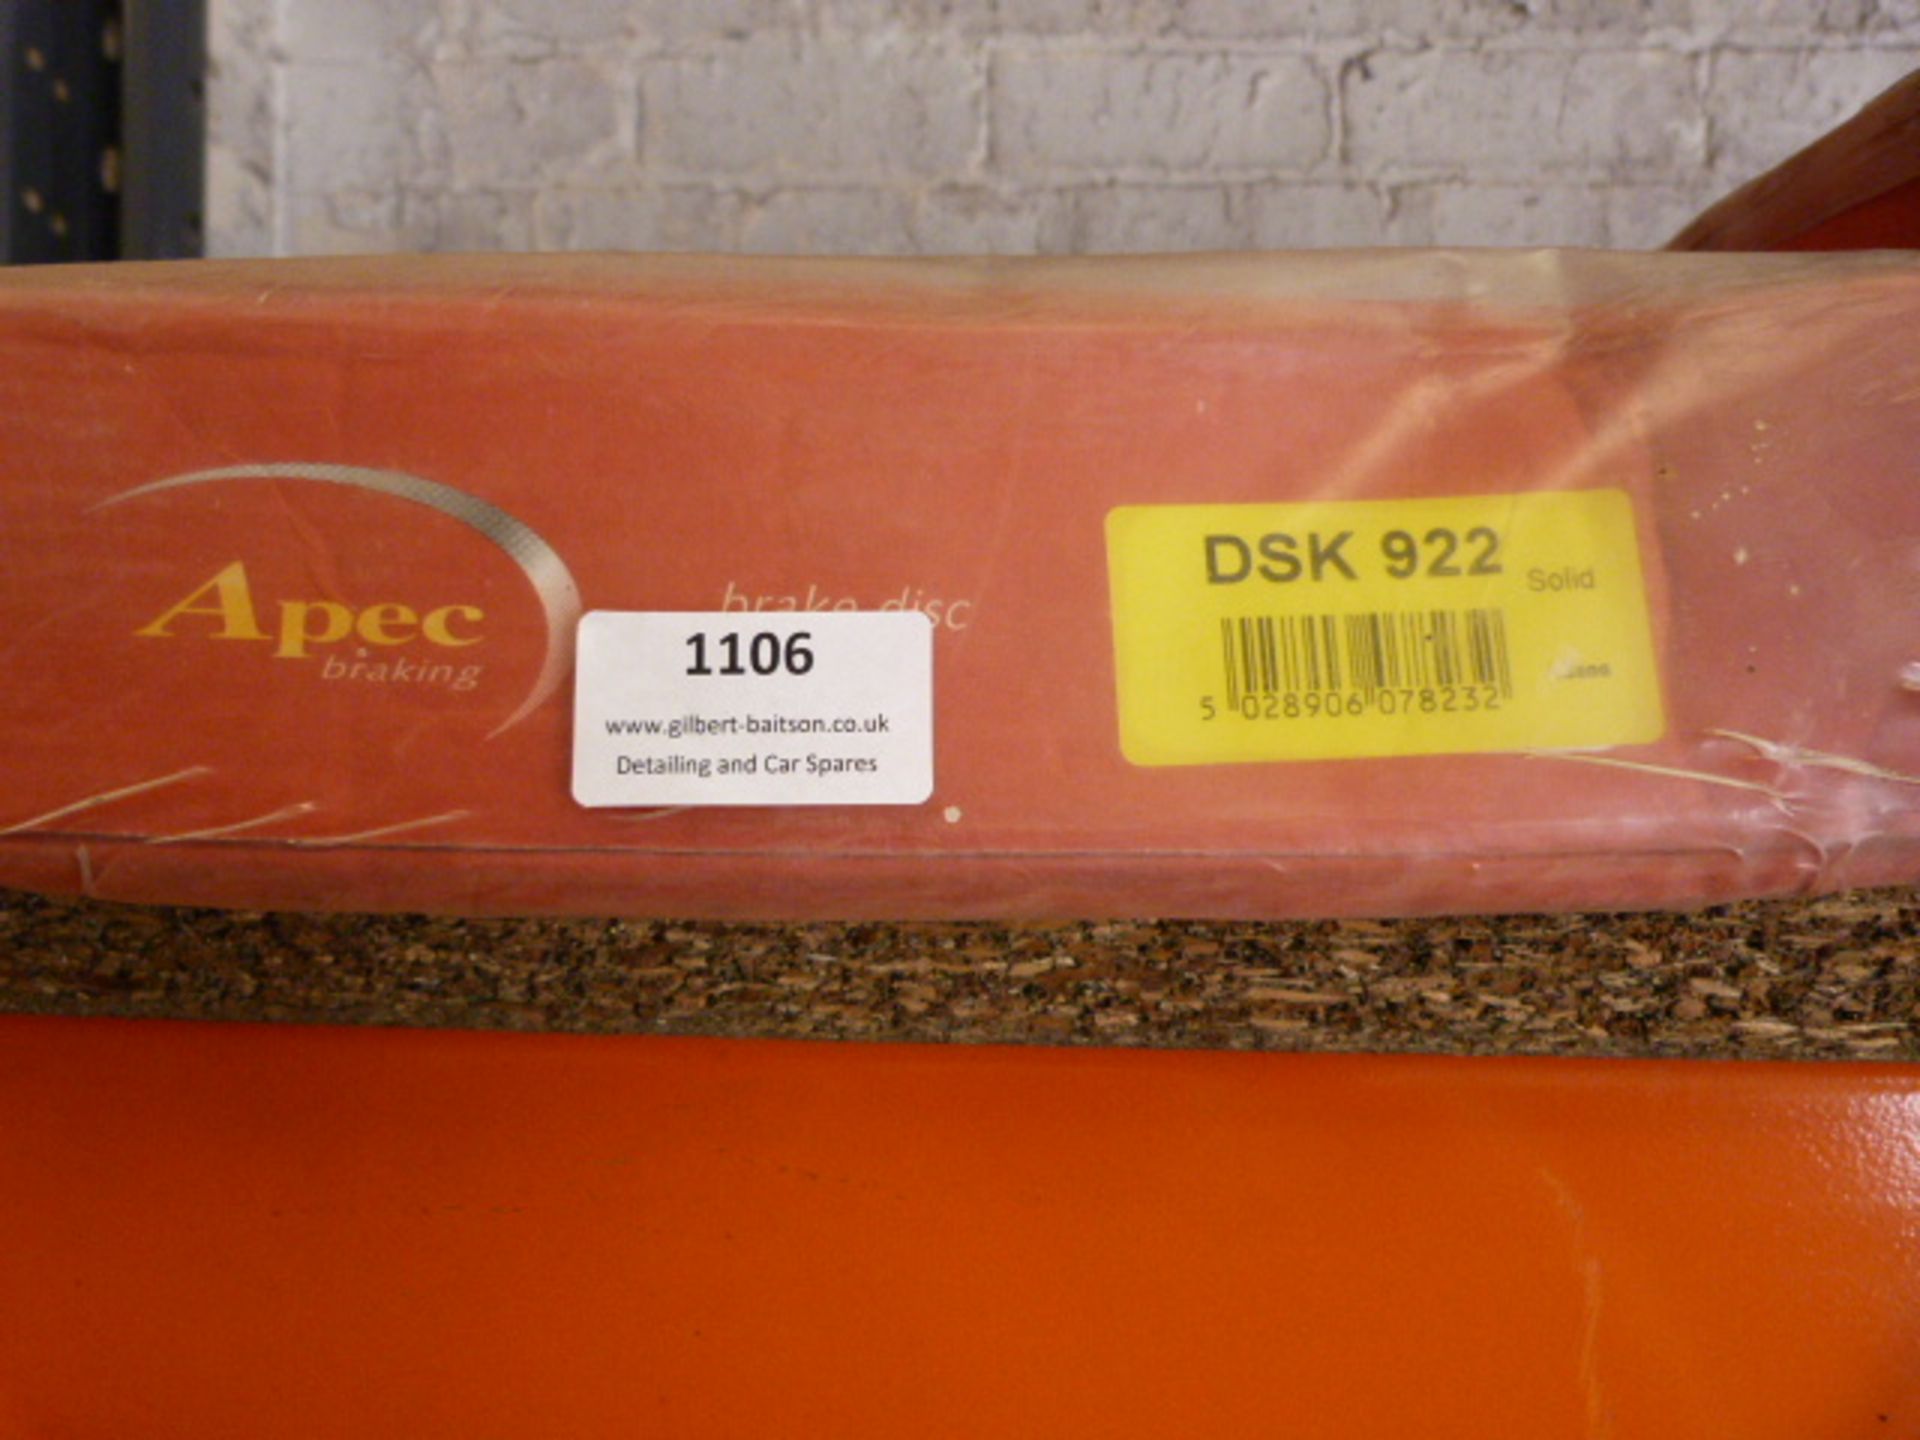 Apec Brake Disc Part No. DSK922